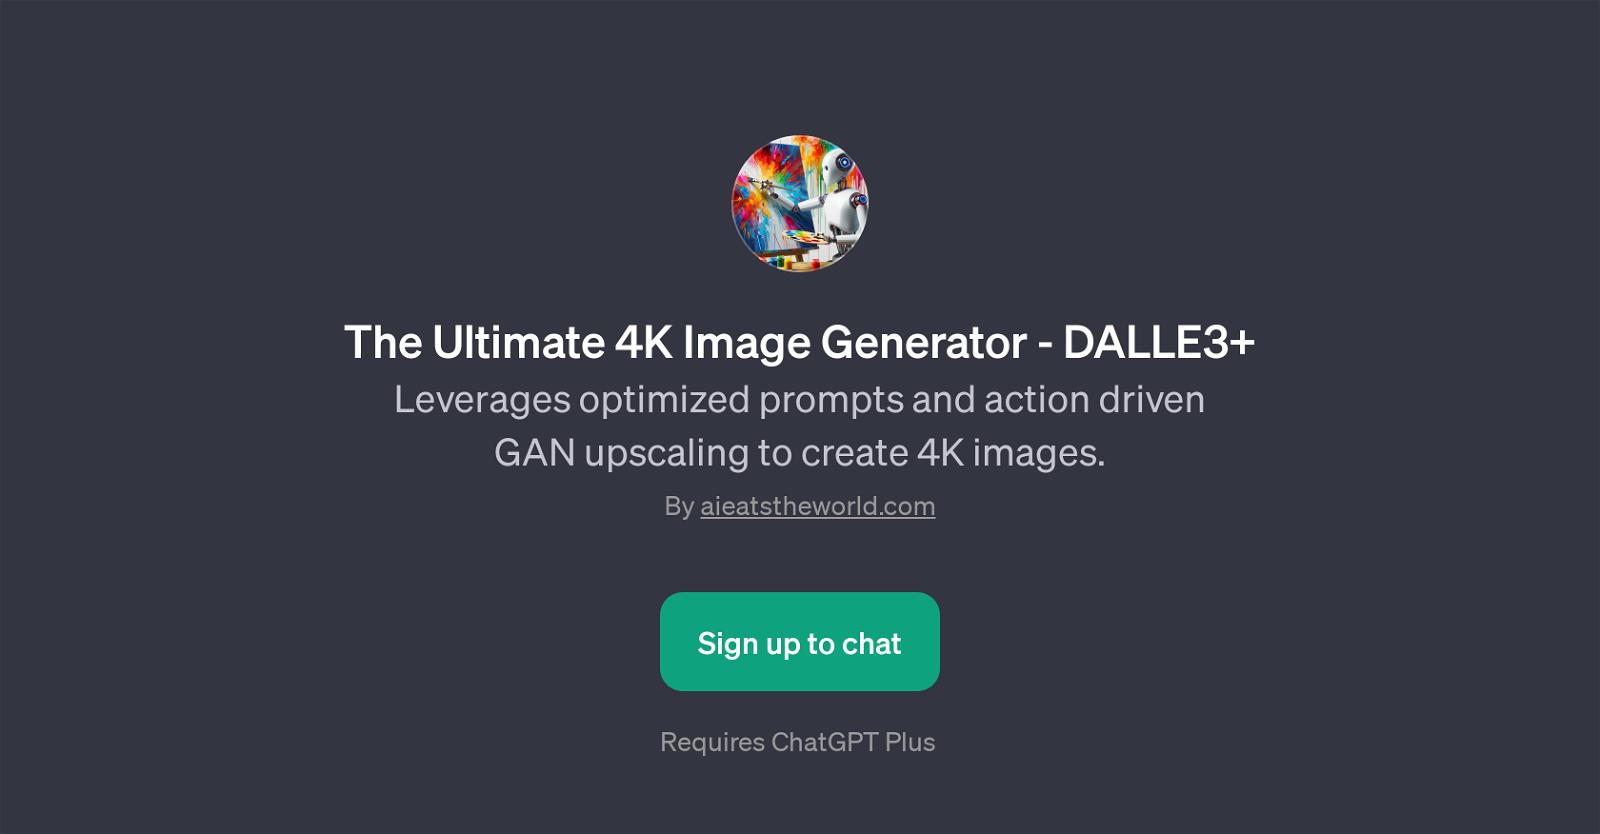 The Ultimate 4K Image Generator - DALLE3+ website